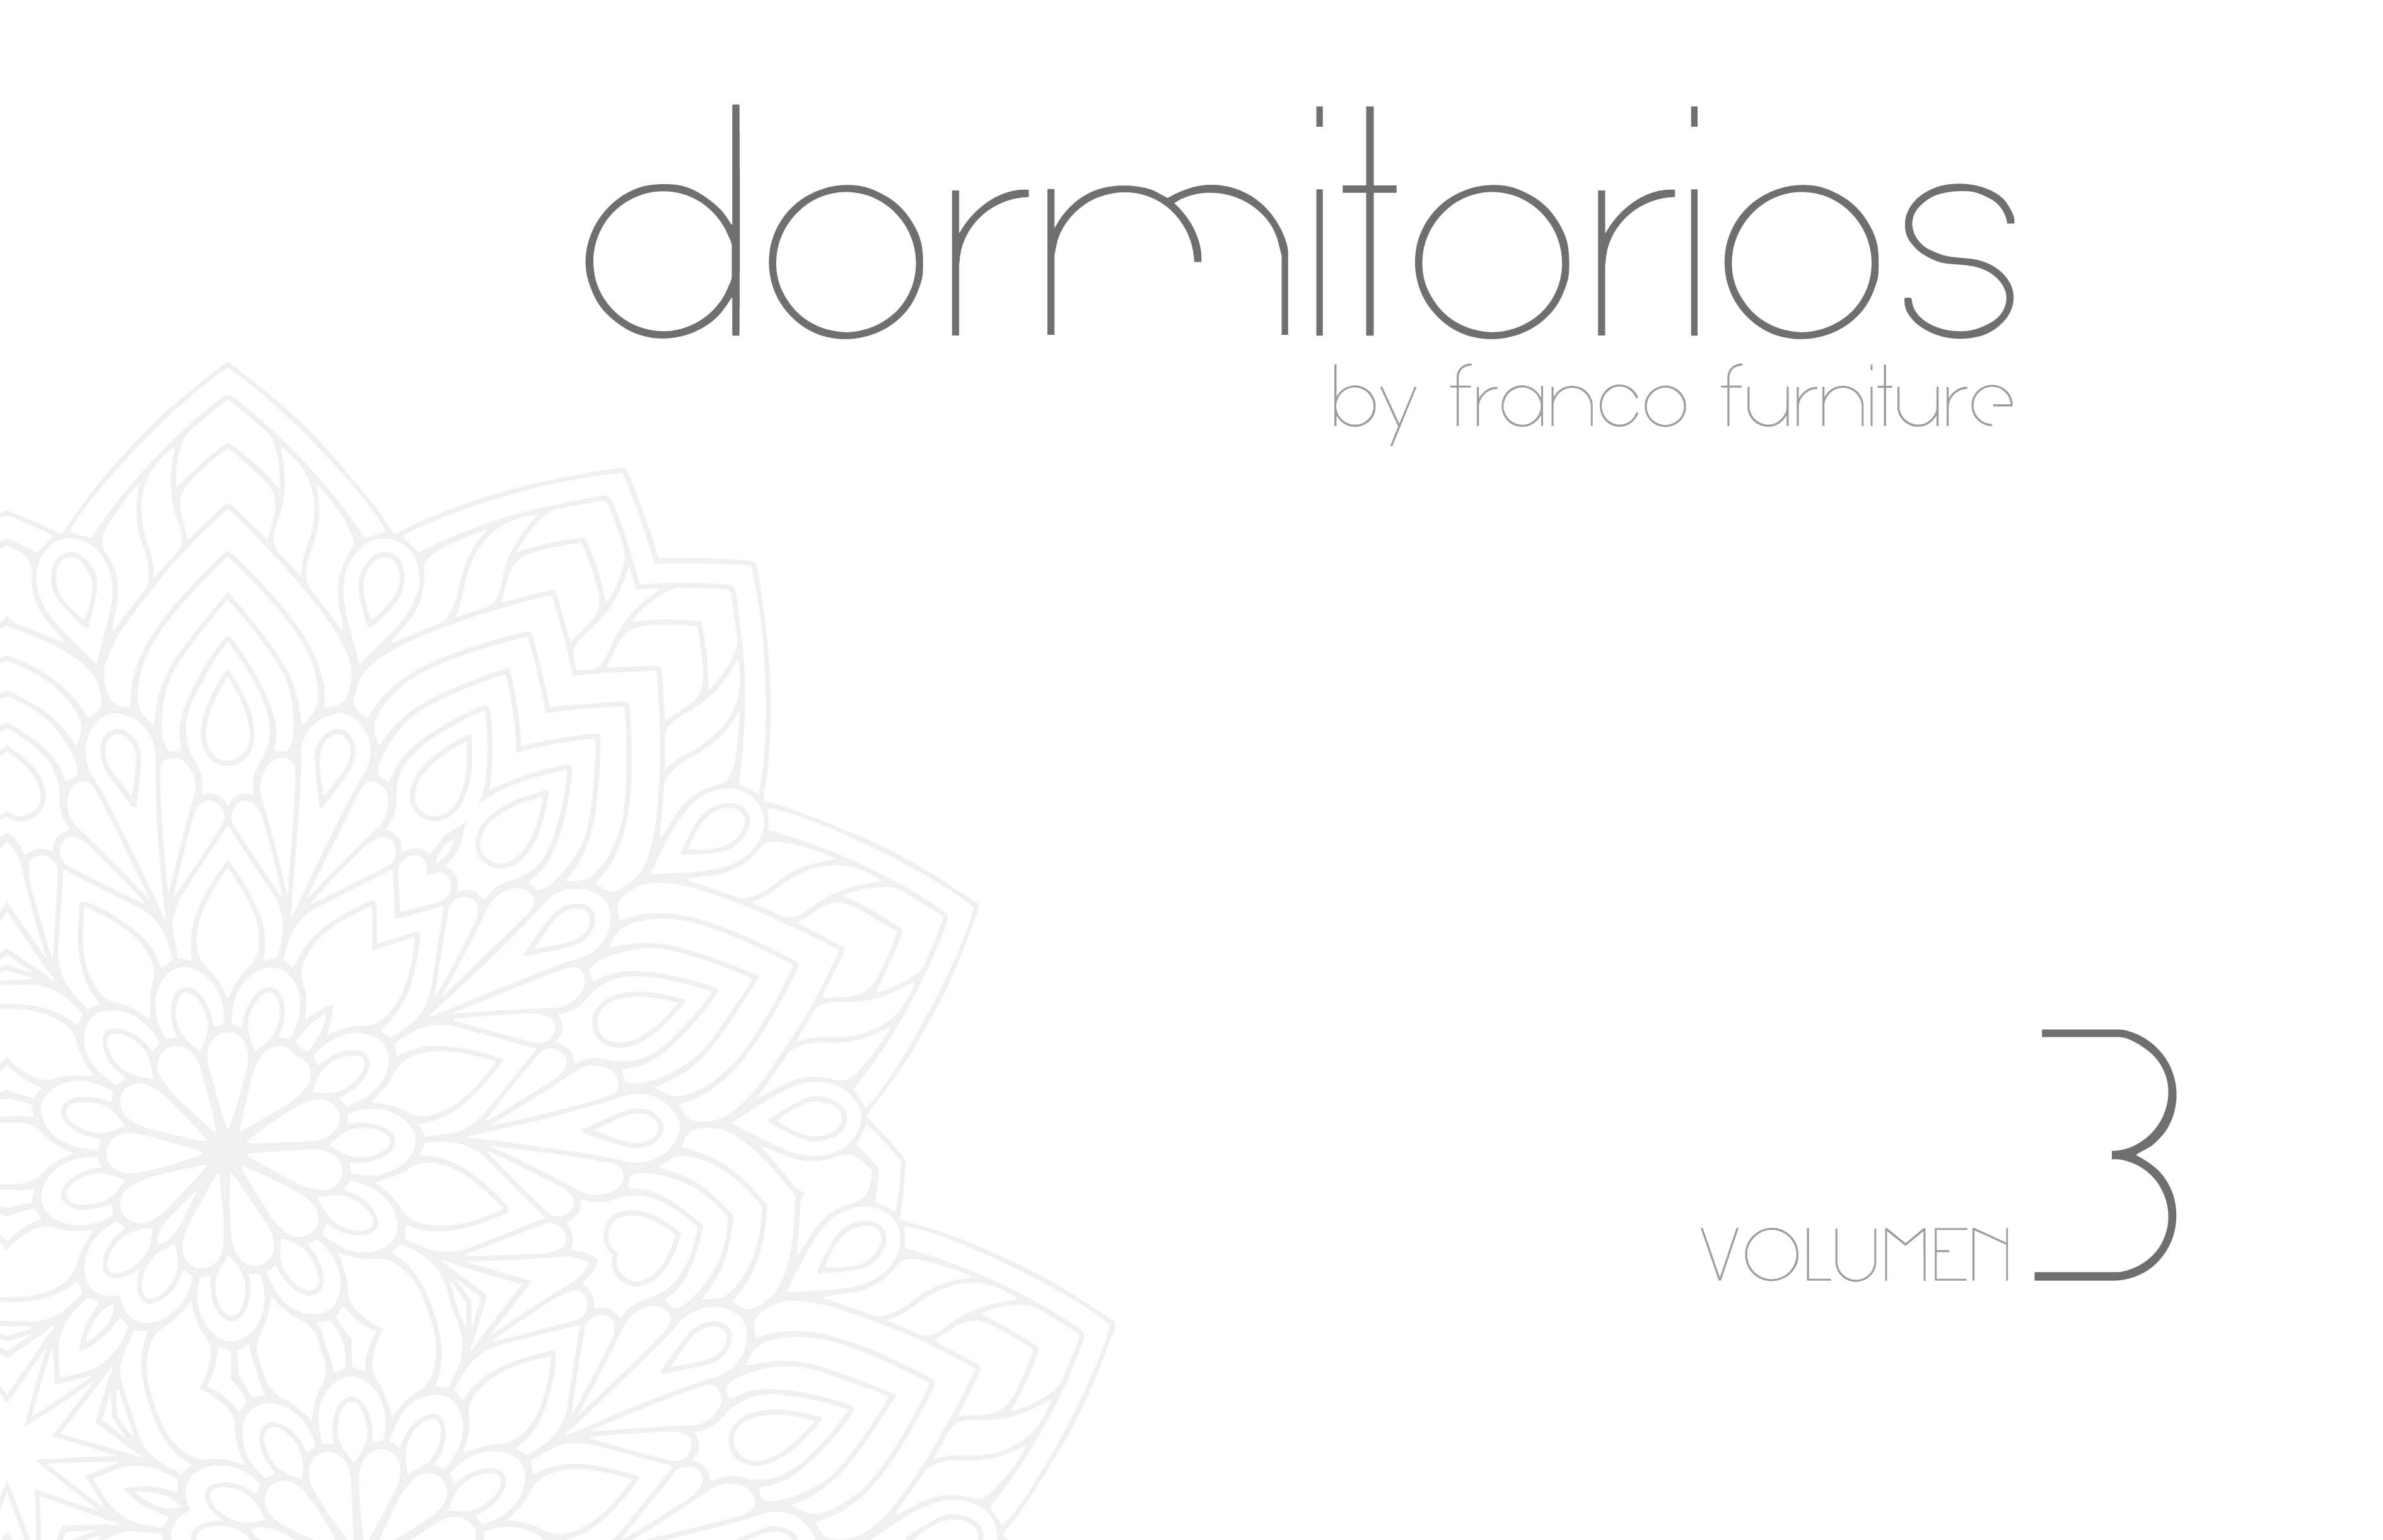 Franco Dormitorios Catalog Volume 3, Spain